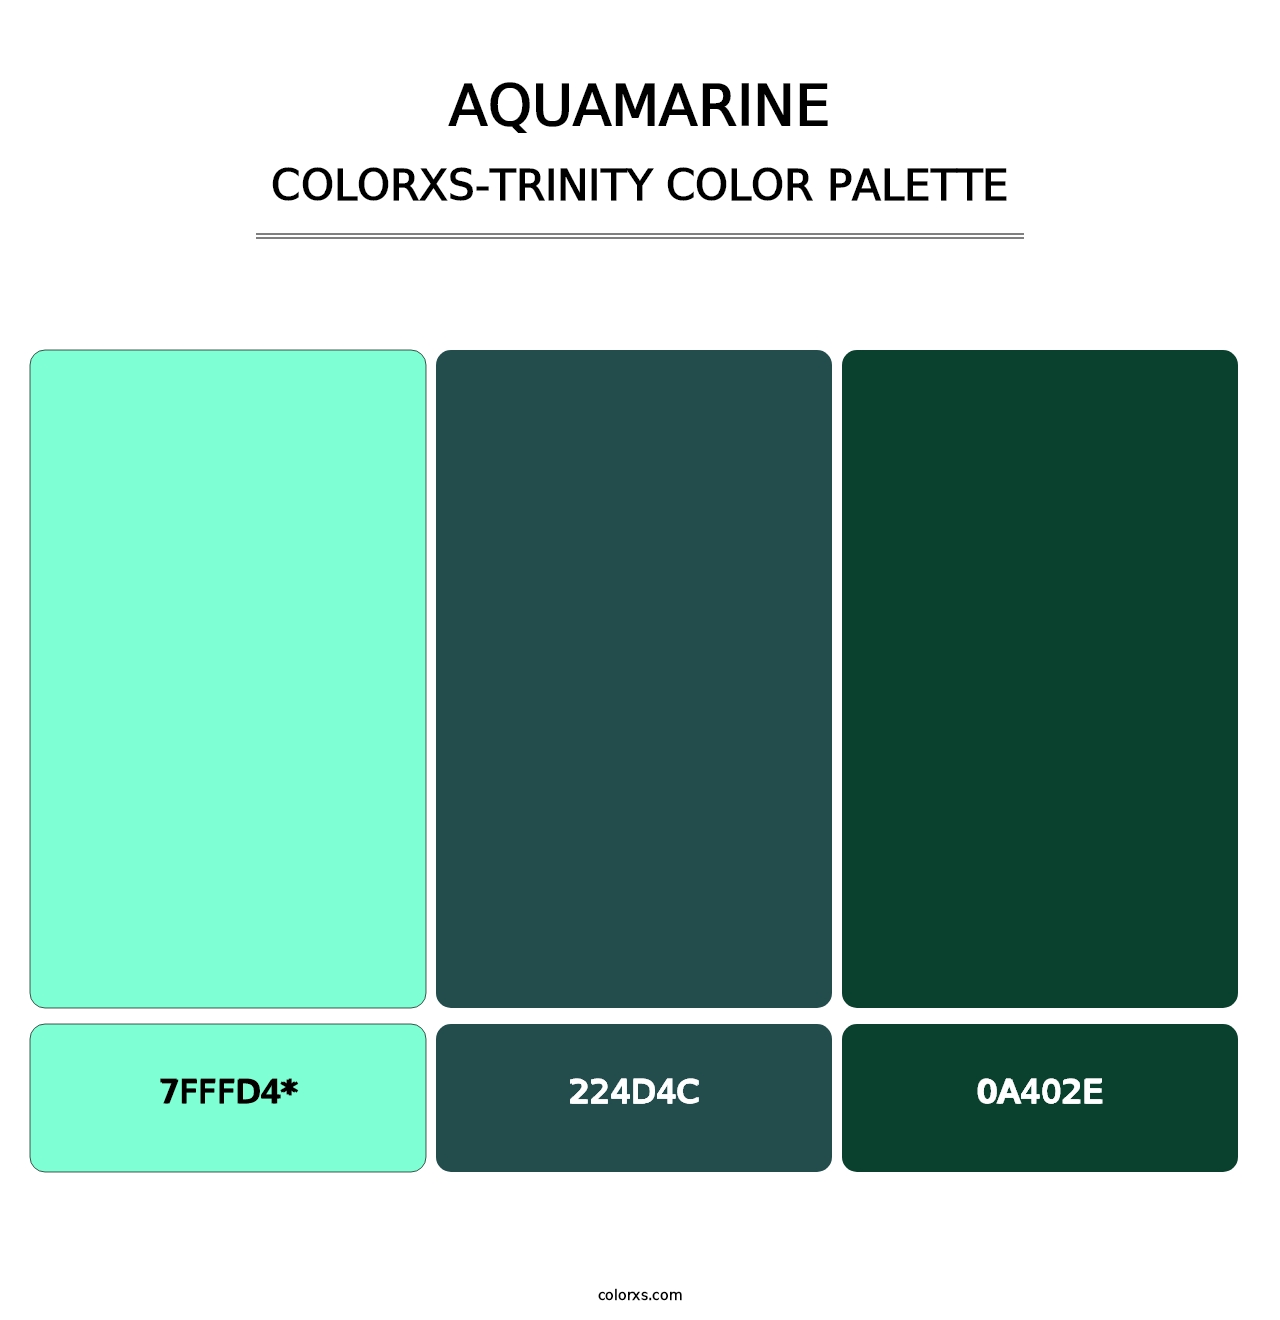 Aquamarine - Colorxs Trinity Palette